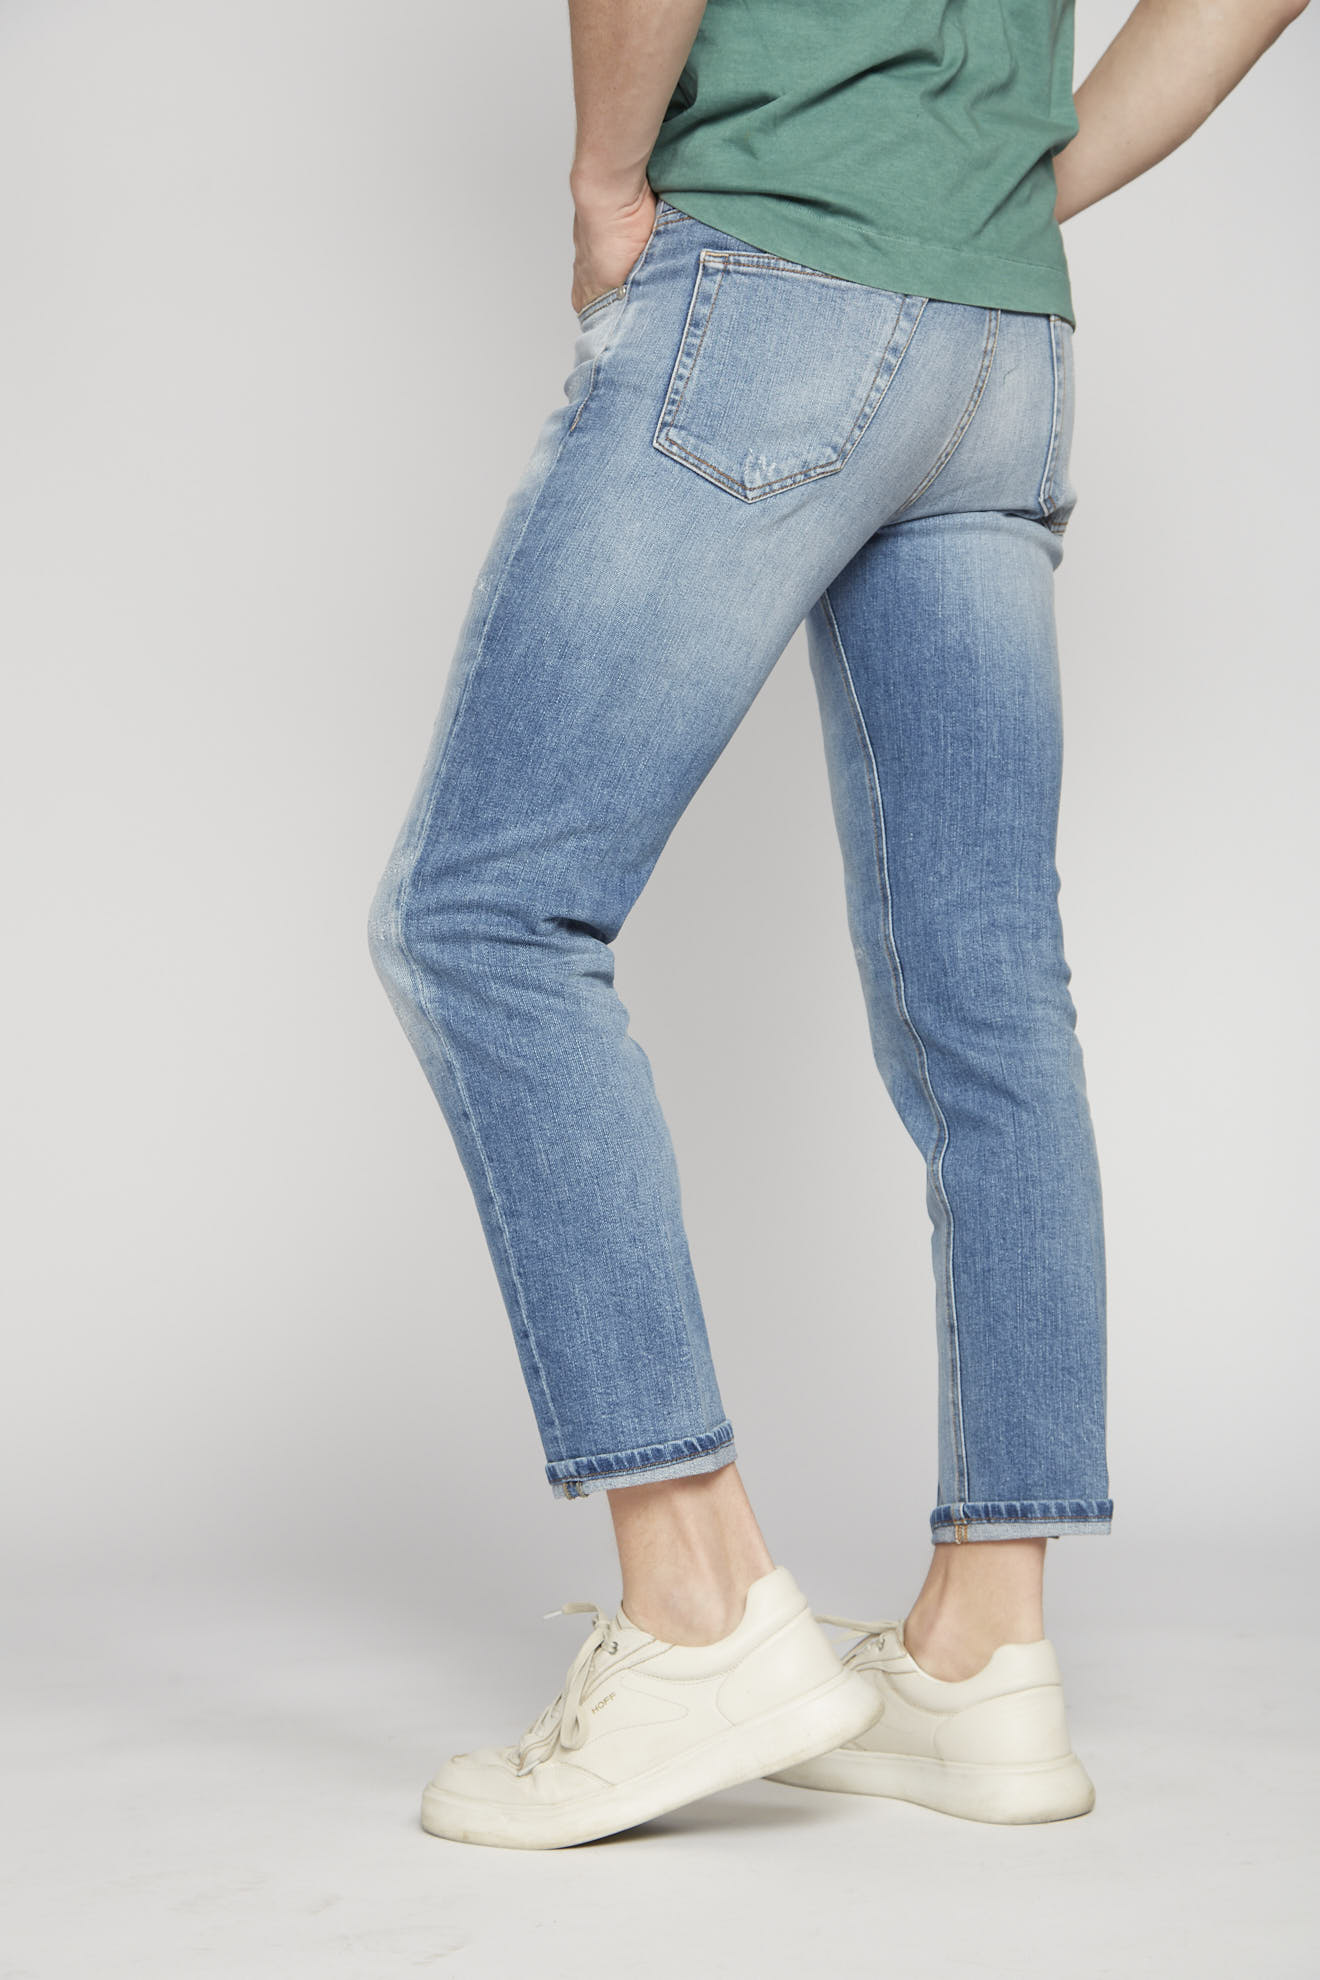 pt torino jeans denim destroyed cotton model rückansicht